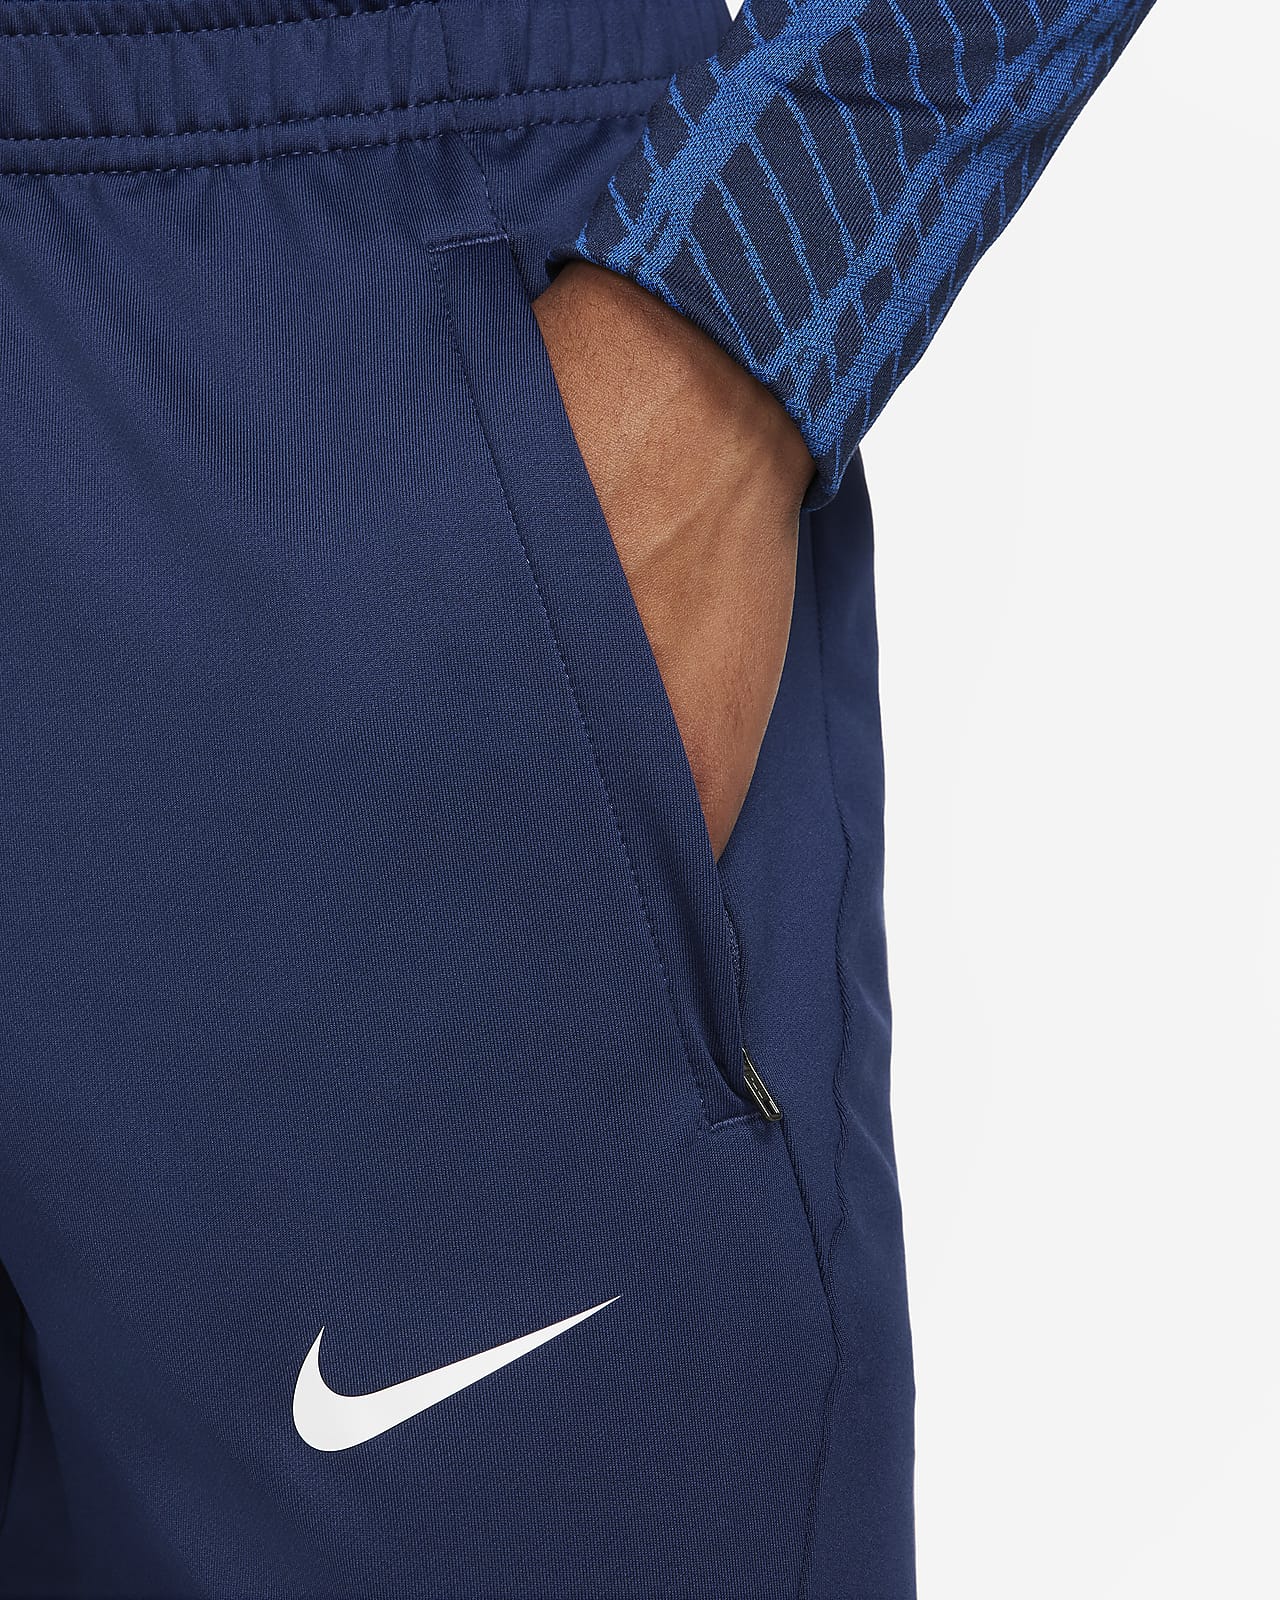 Nike, Dri-FIT Strike Soccer Pants Mens, Performance Tracksuit Bottoms